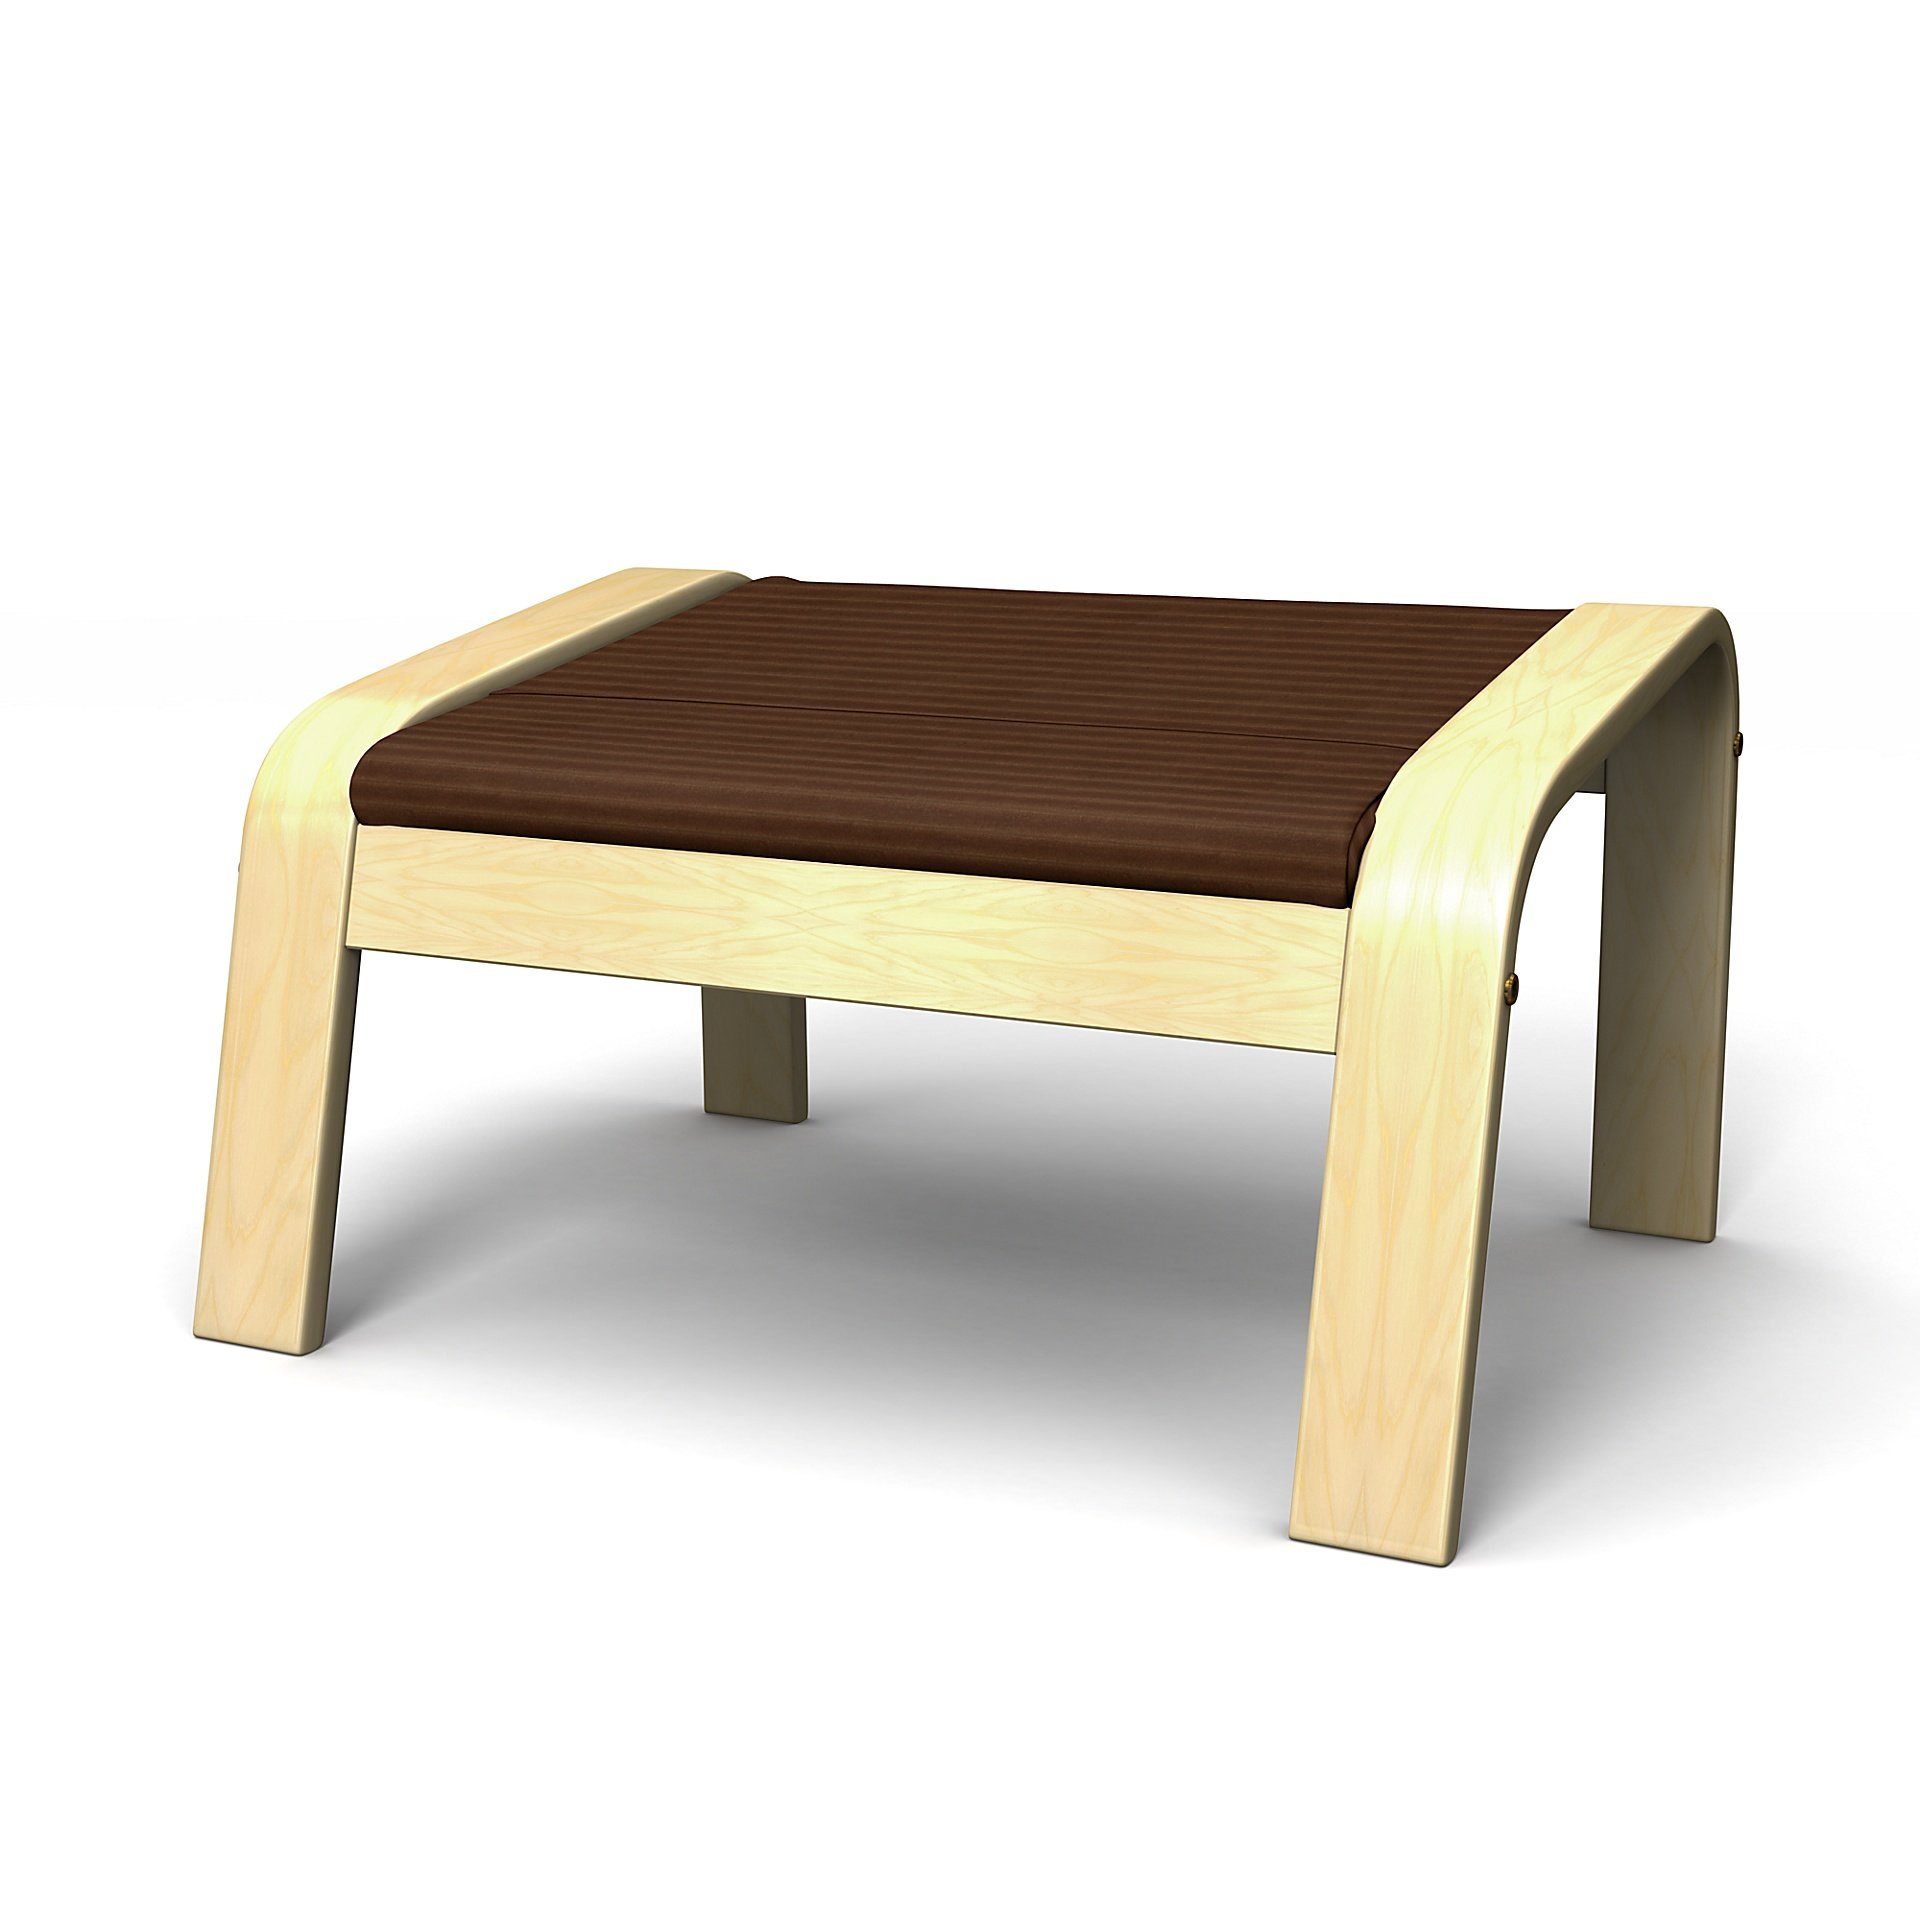 IKEA - Poang Footstool Cover, Chocolate Brown, Corduroy - Bemz